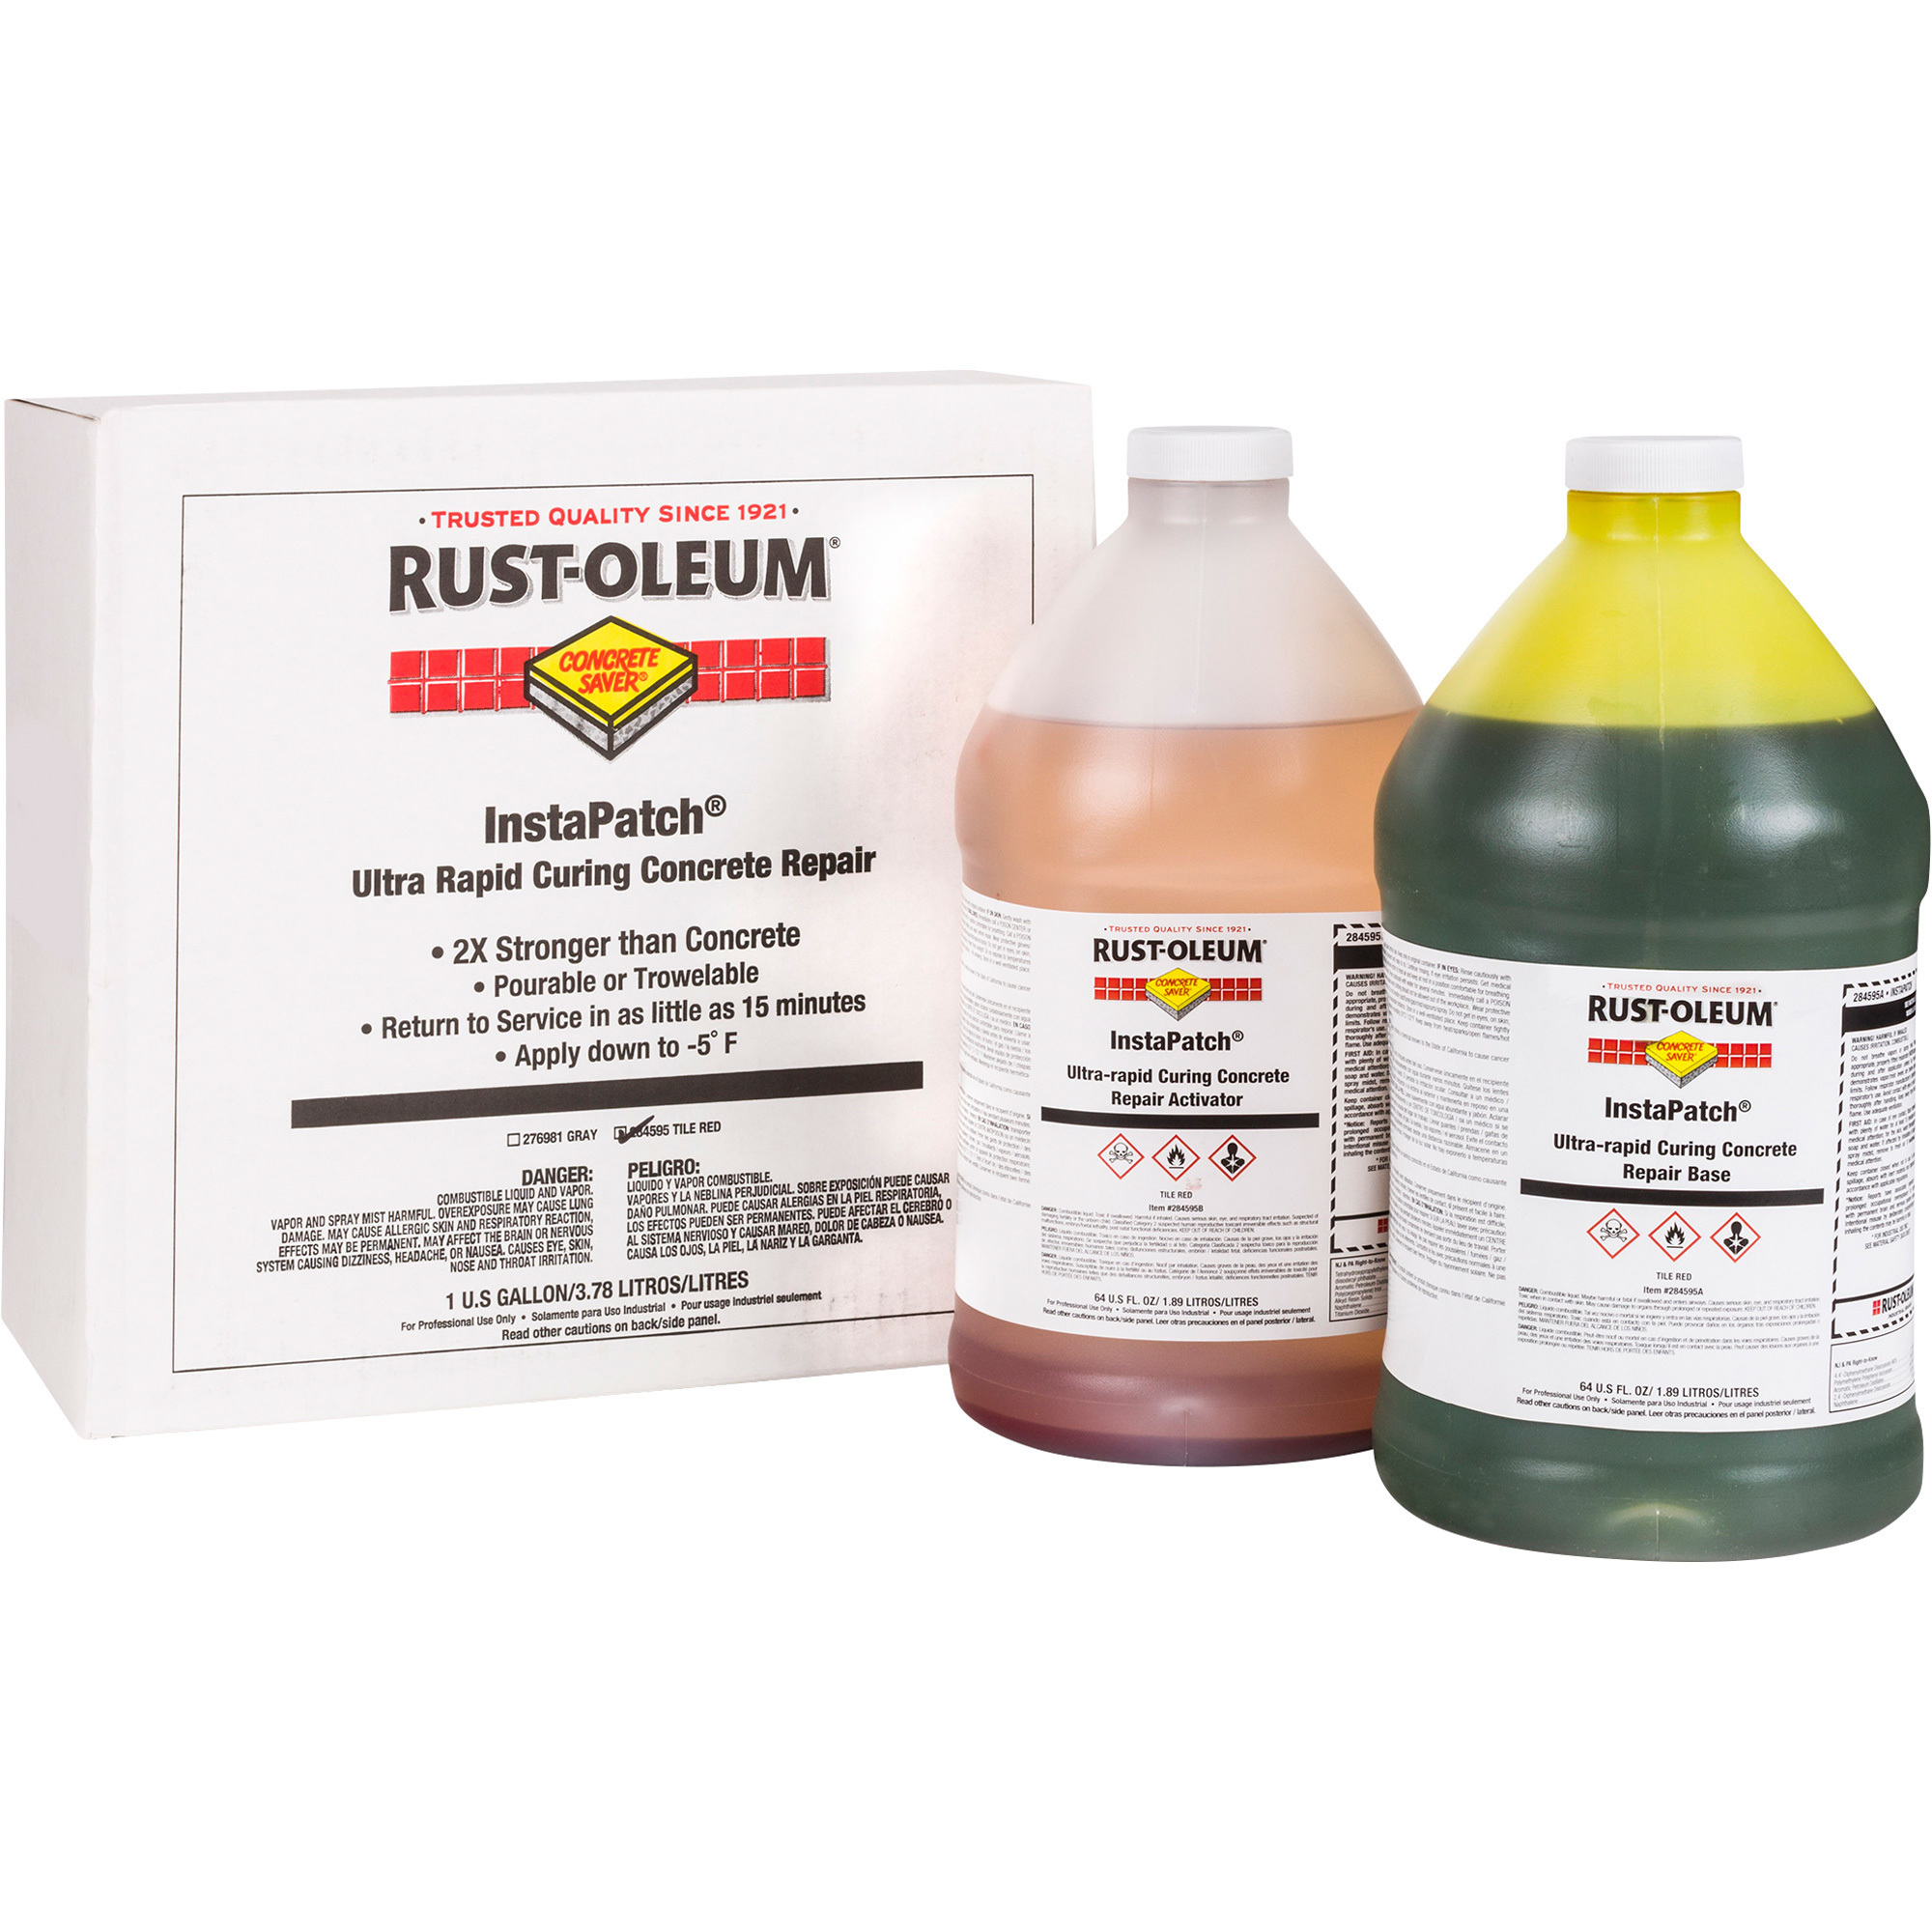 Rust-Oleum InstaPatch Ultra Rapid Curing Concrete Repair â 1-Gallon Kit, Tile Red